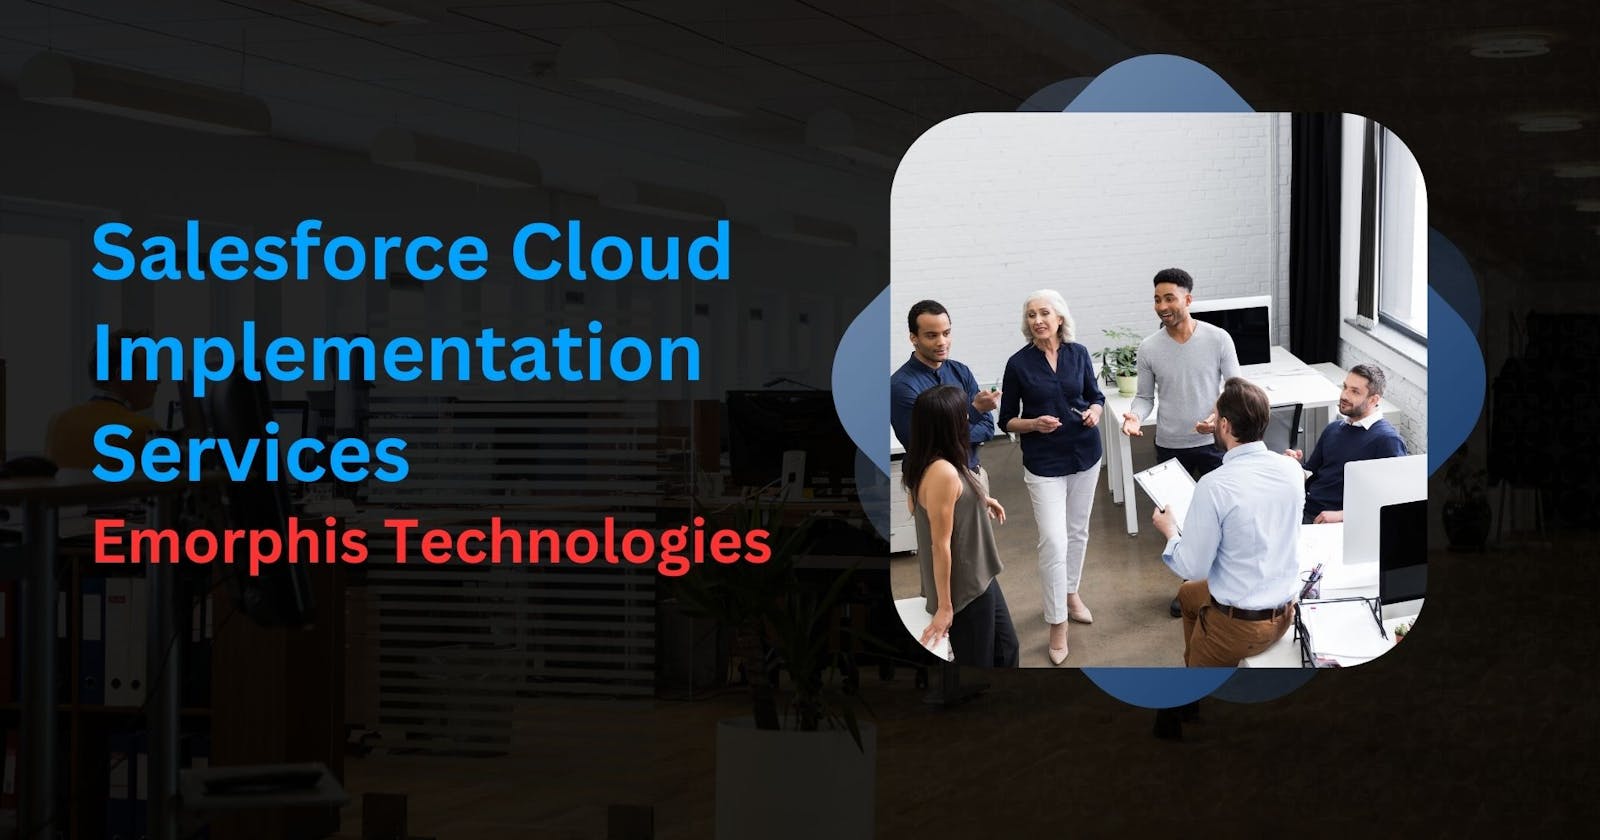 Salesforce Cloud Implementation Services - Emorphis Technologies